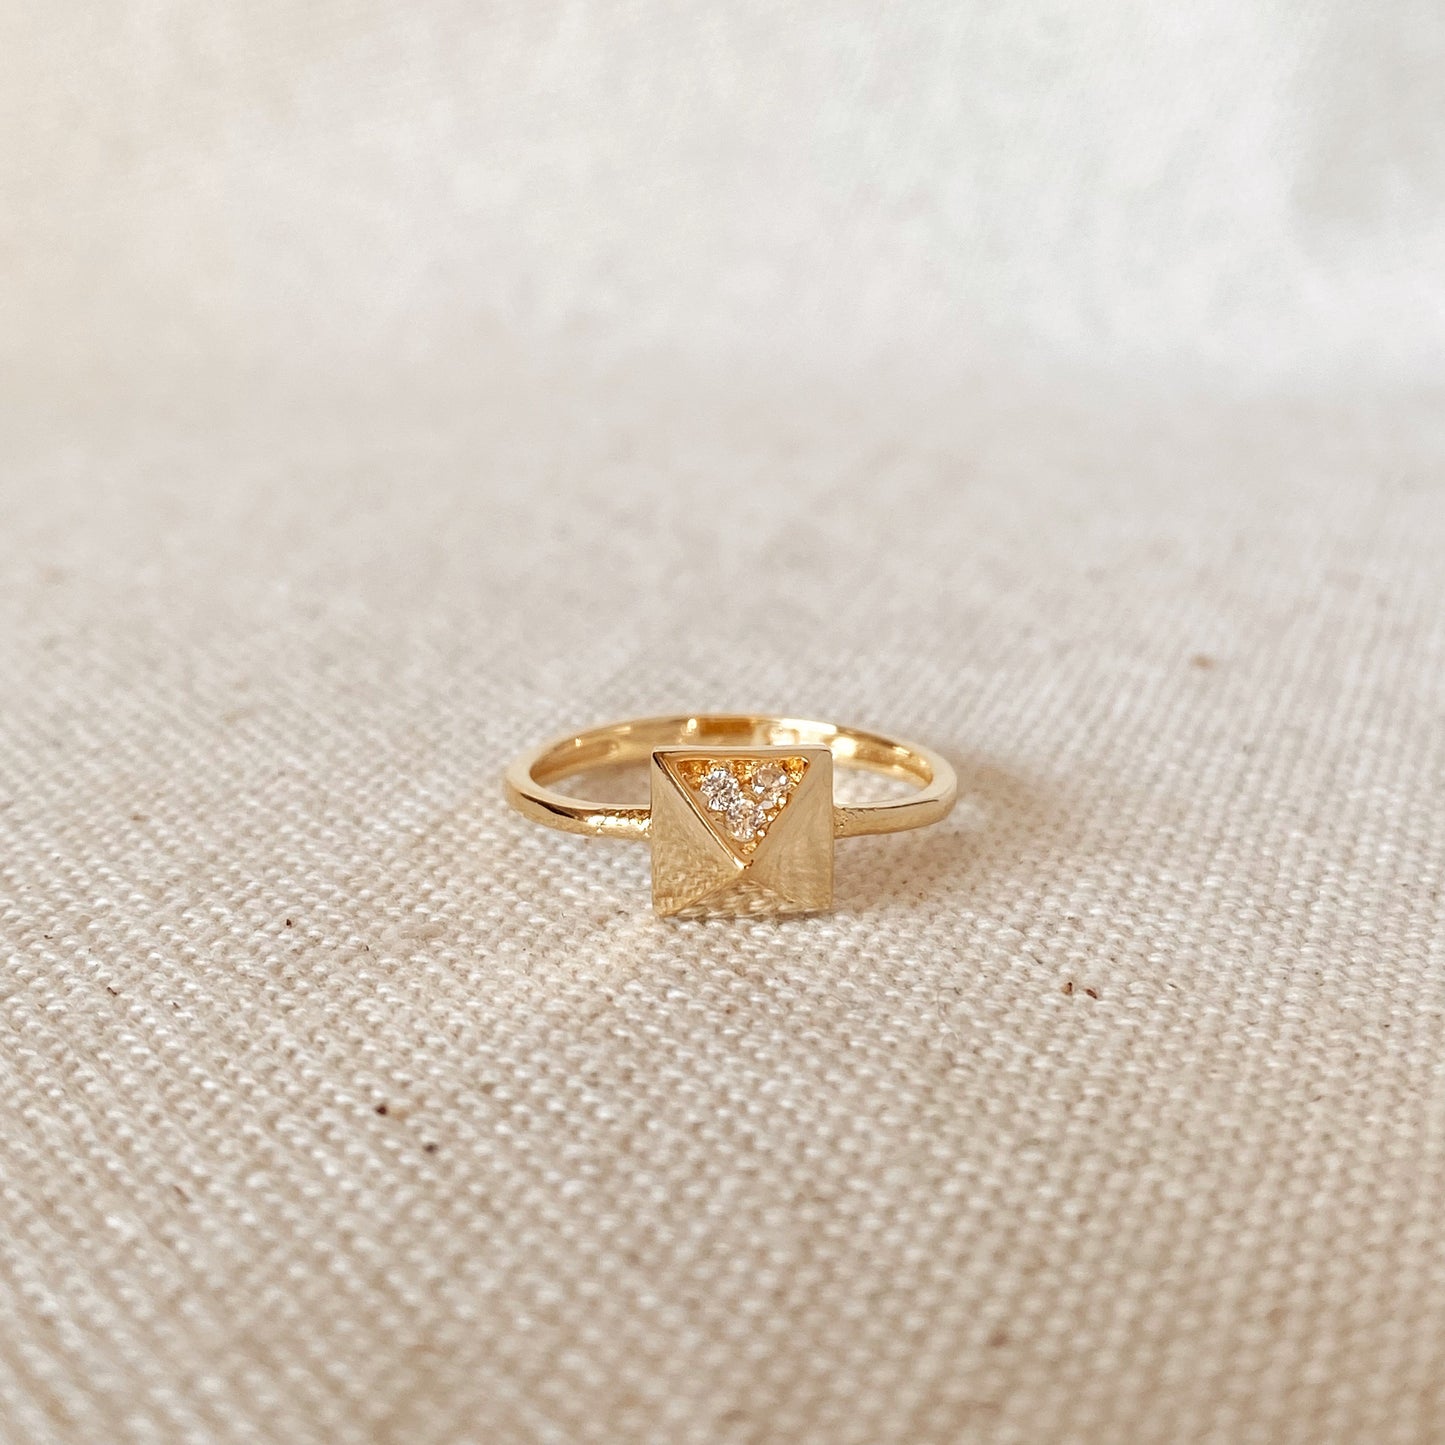 GoldFi 18k Gold Filled Pyramid Ring